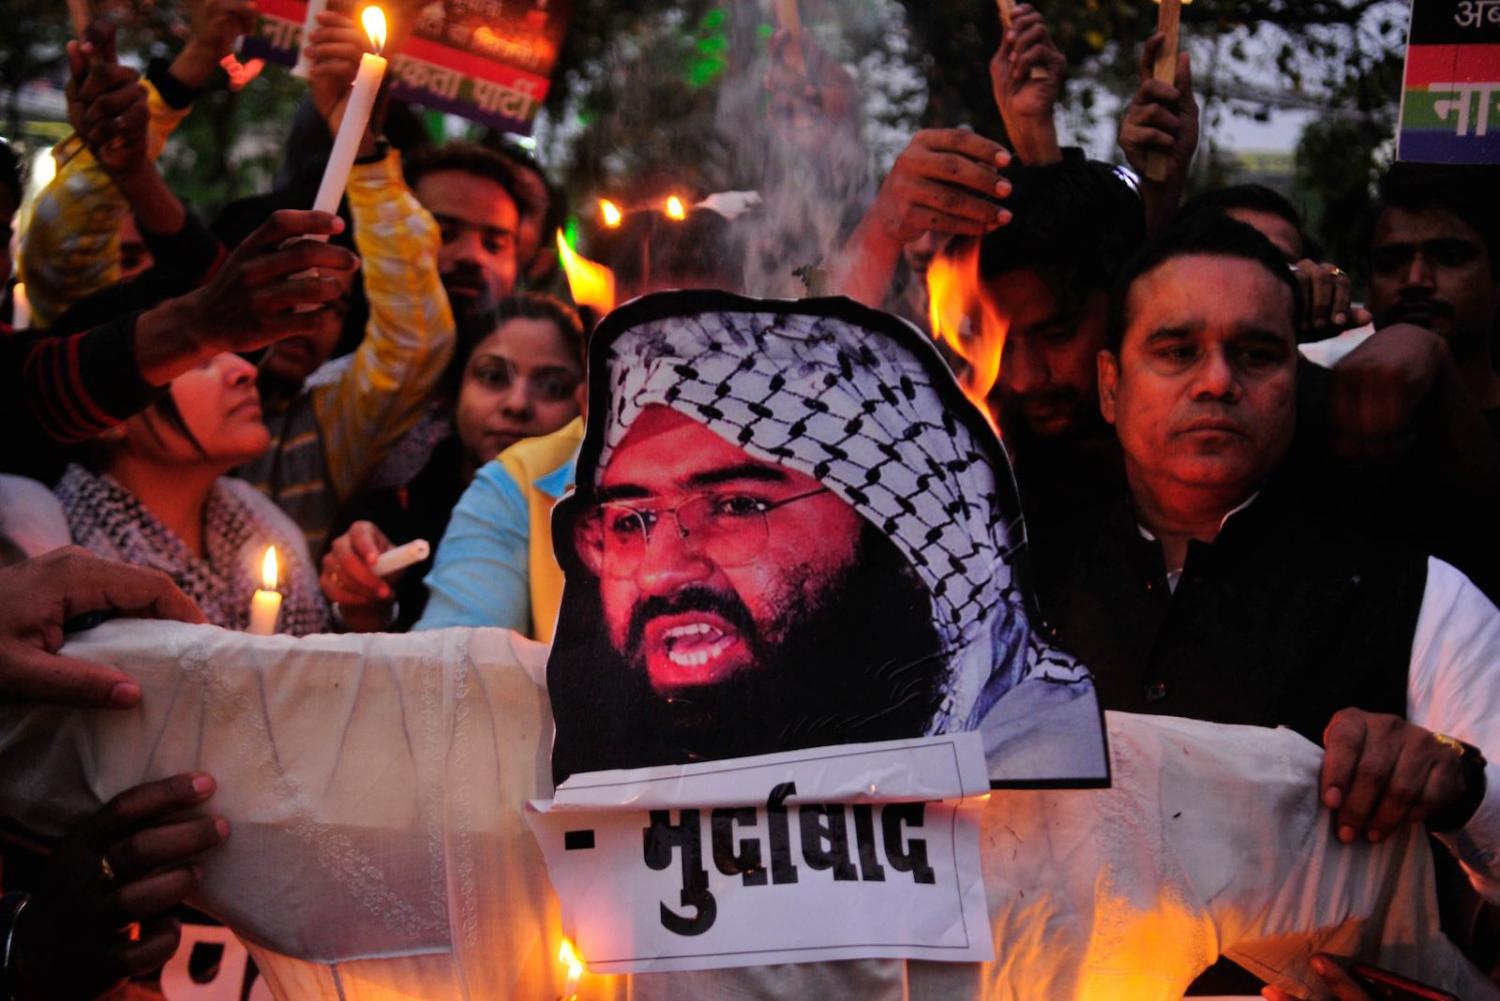 Demonstrators in India burn an effigy of Jaish-e-Mohammed leader Masood Azhar in February (Photo: Deepak Gupta via Getty)